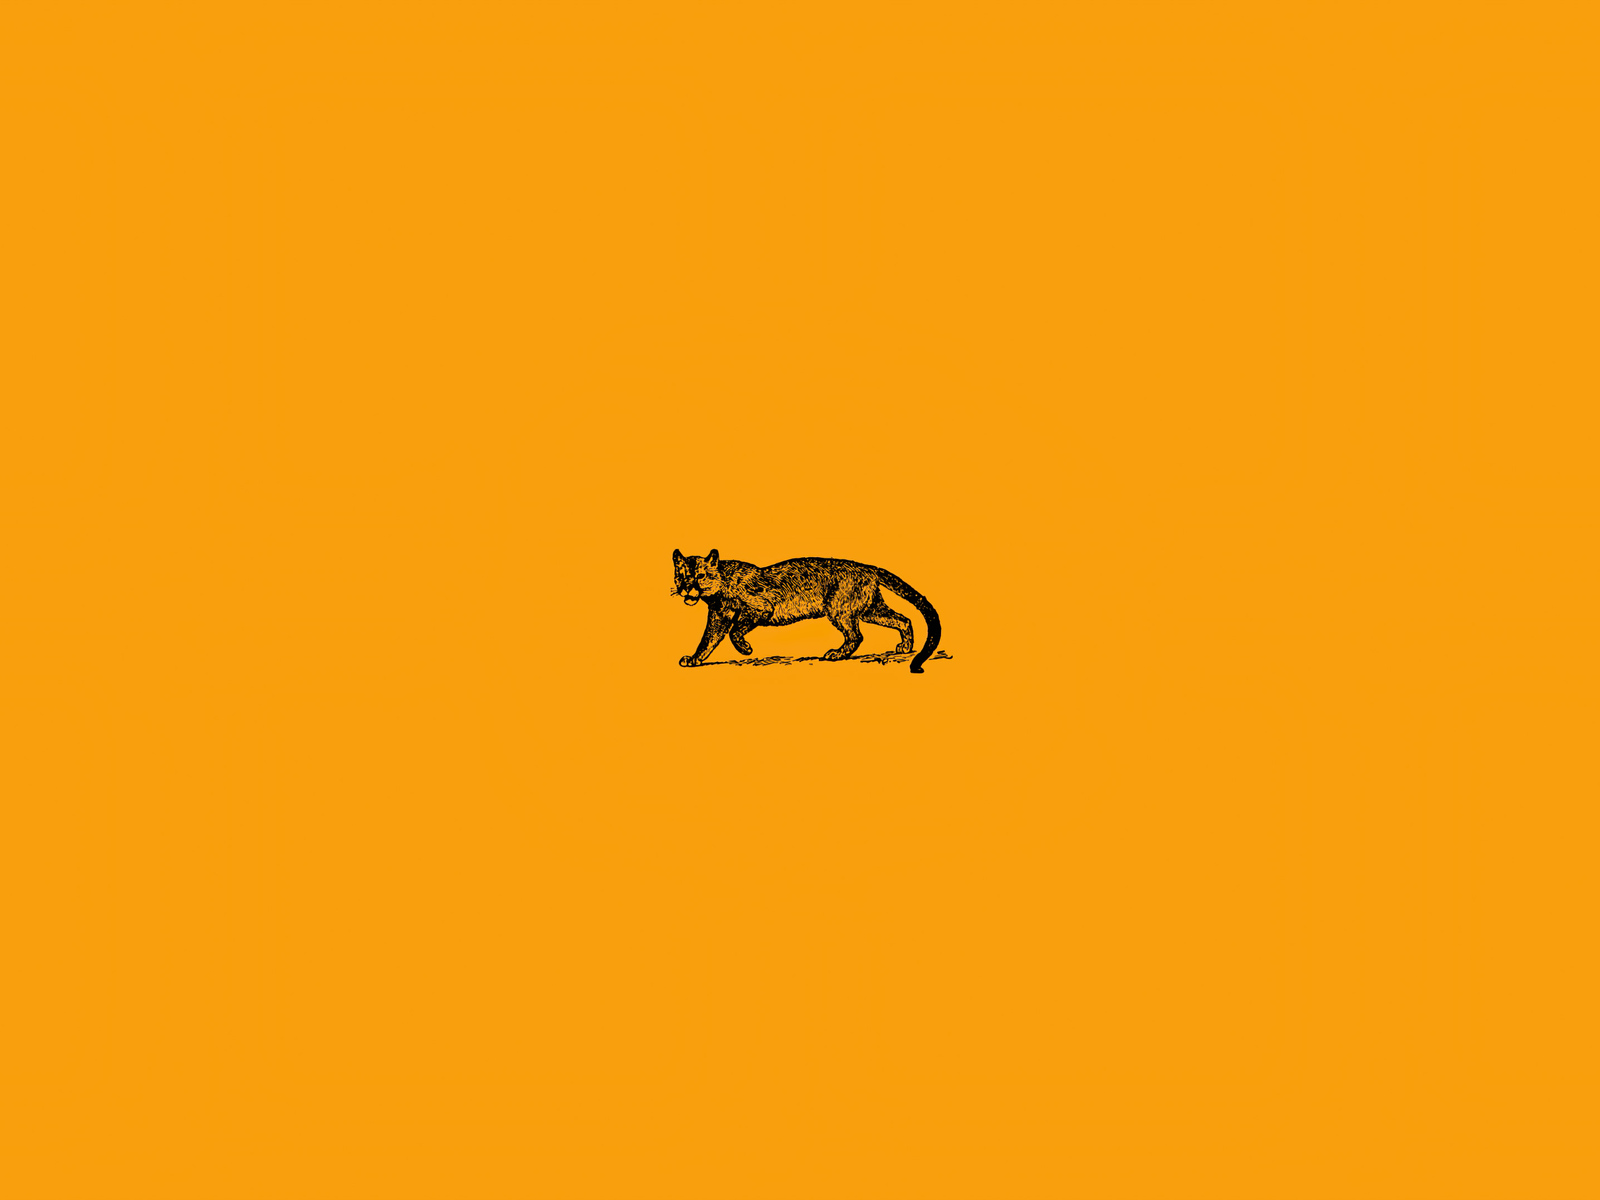 An illustration of a small cat-like animal on an orange background - Minimalist